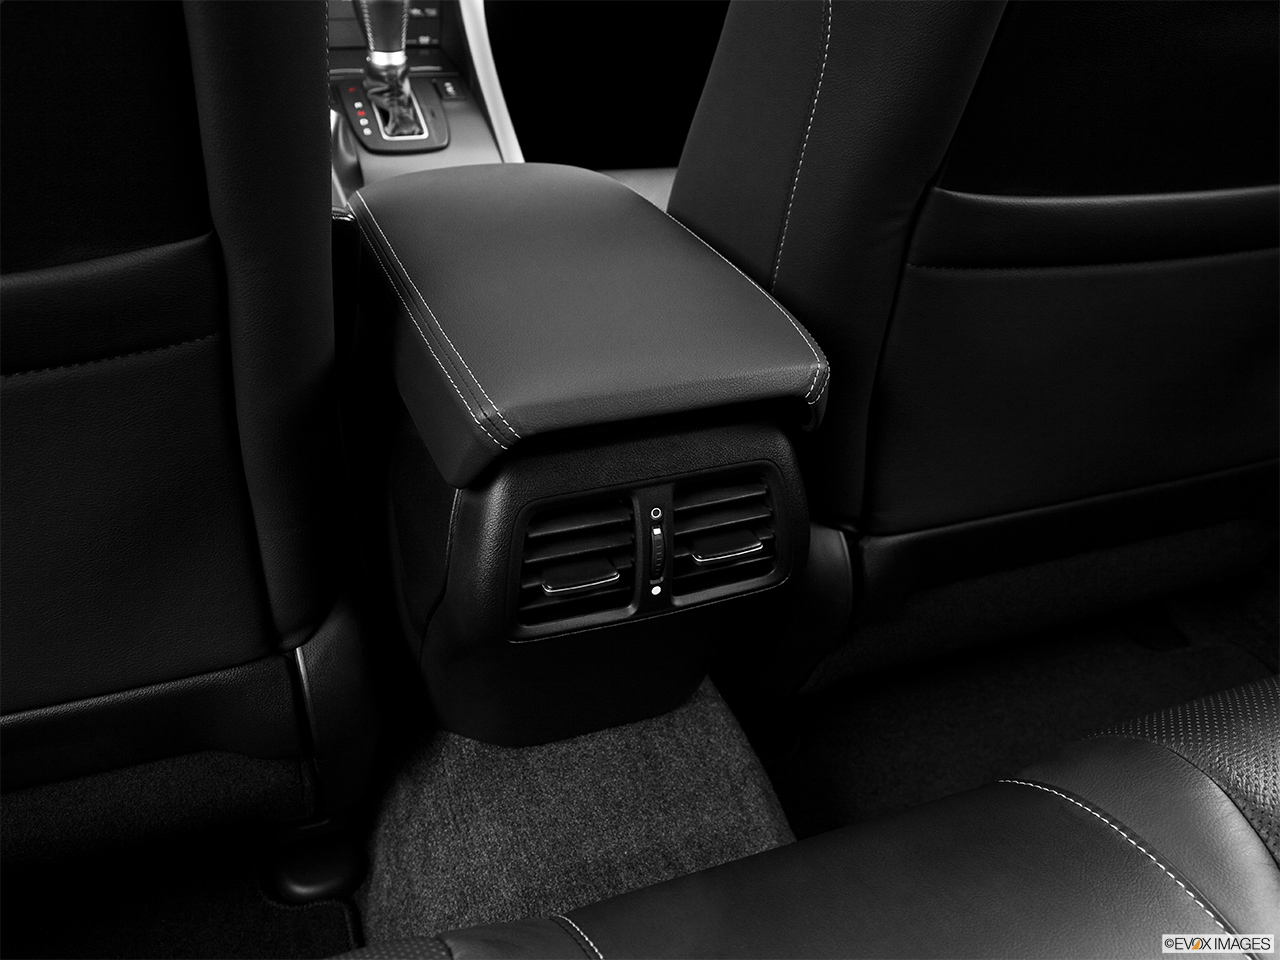 2014 Acura TSX Sport Wagon Base Rear A/C controls. 